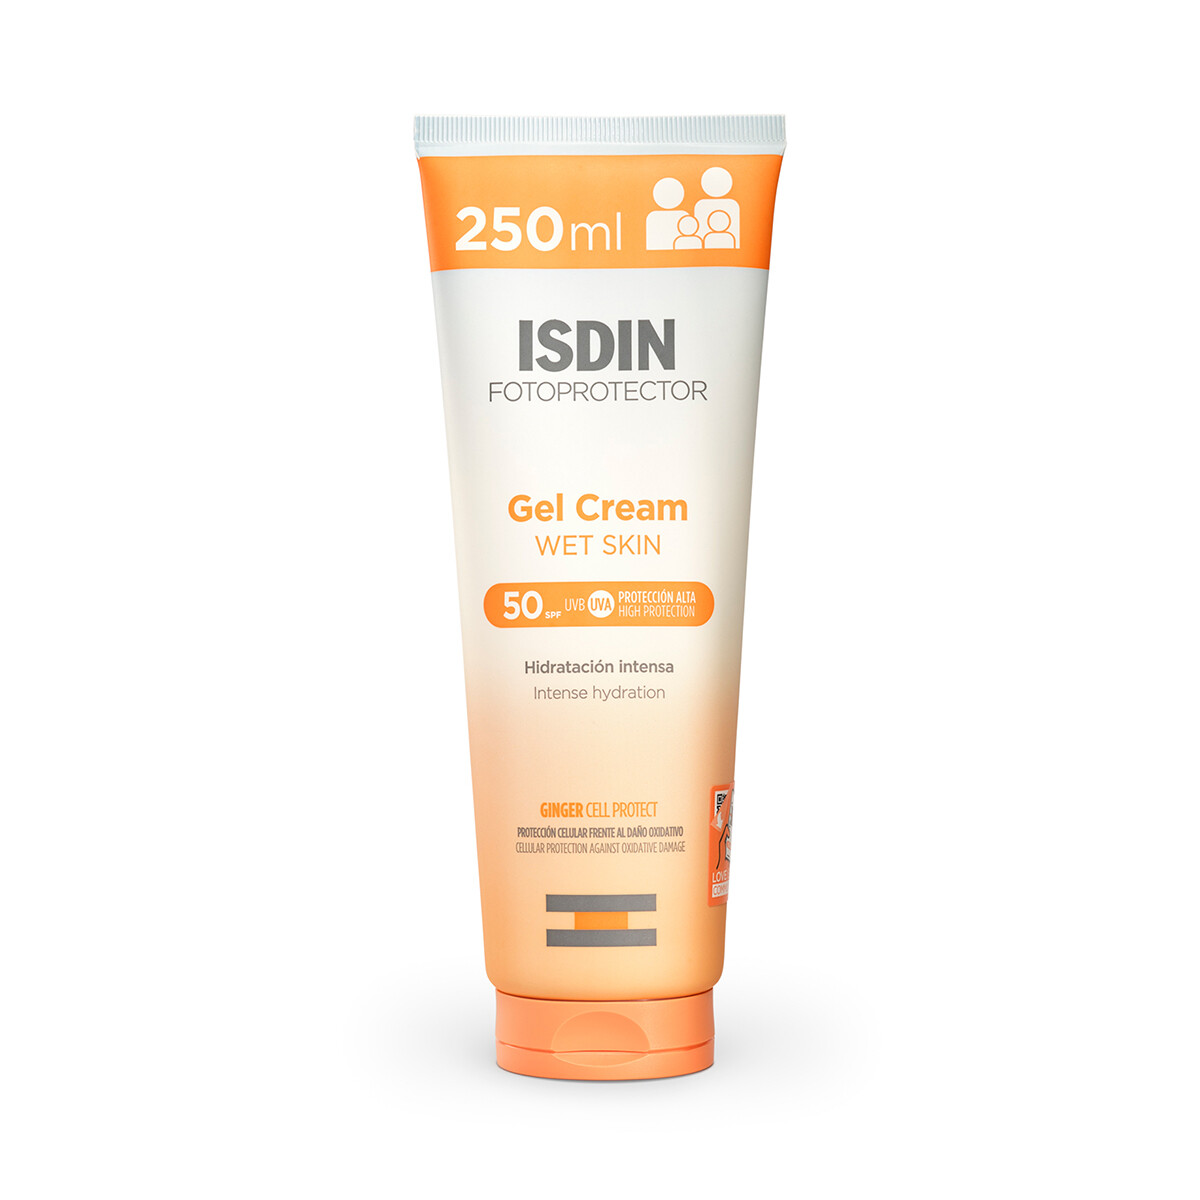 ISDIN Fotoprotector Gel Cream SPF 50 - 250 ml. 